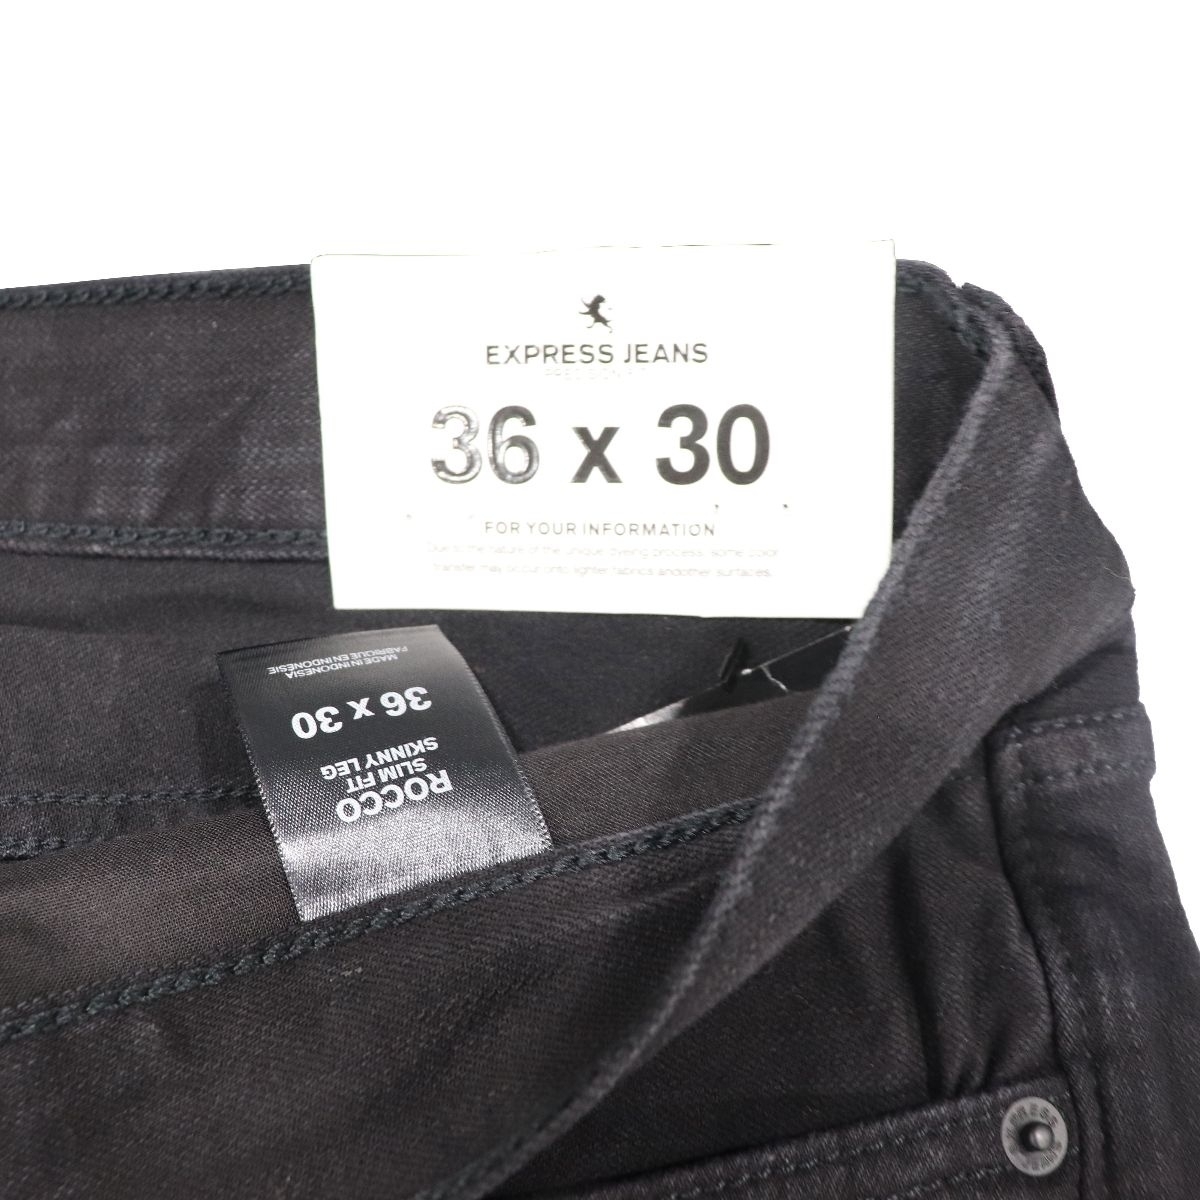 Express Jeans Mens Rocco Slim Fit Skinny Leg/Stretch - (W36 x L30) - Black/Ridge - image 2 of 2